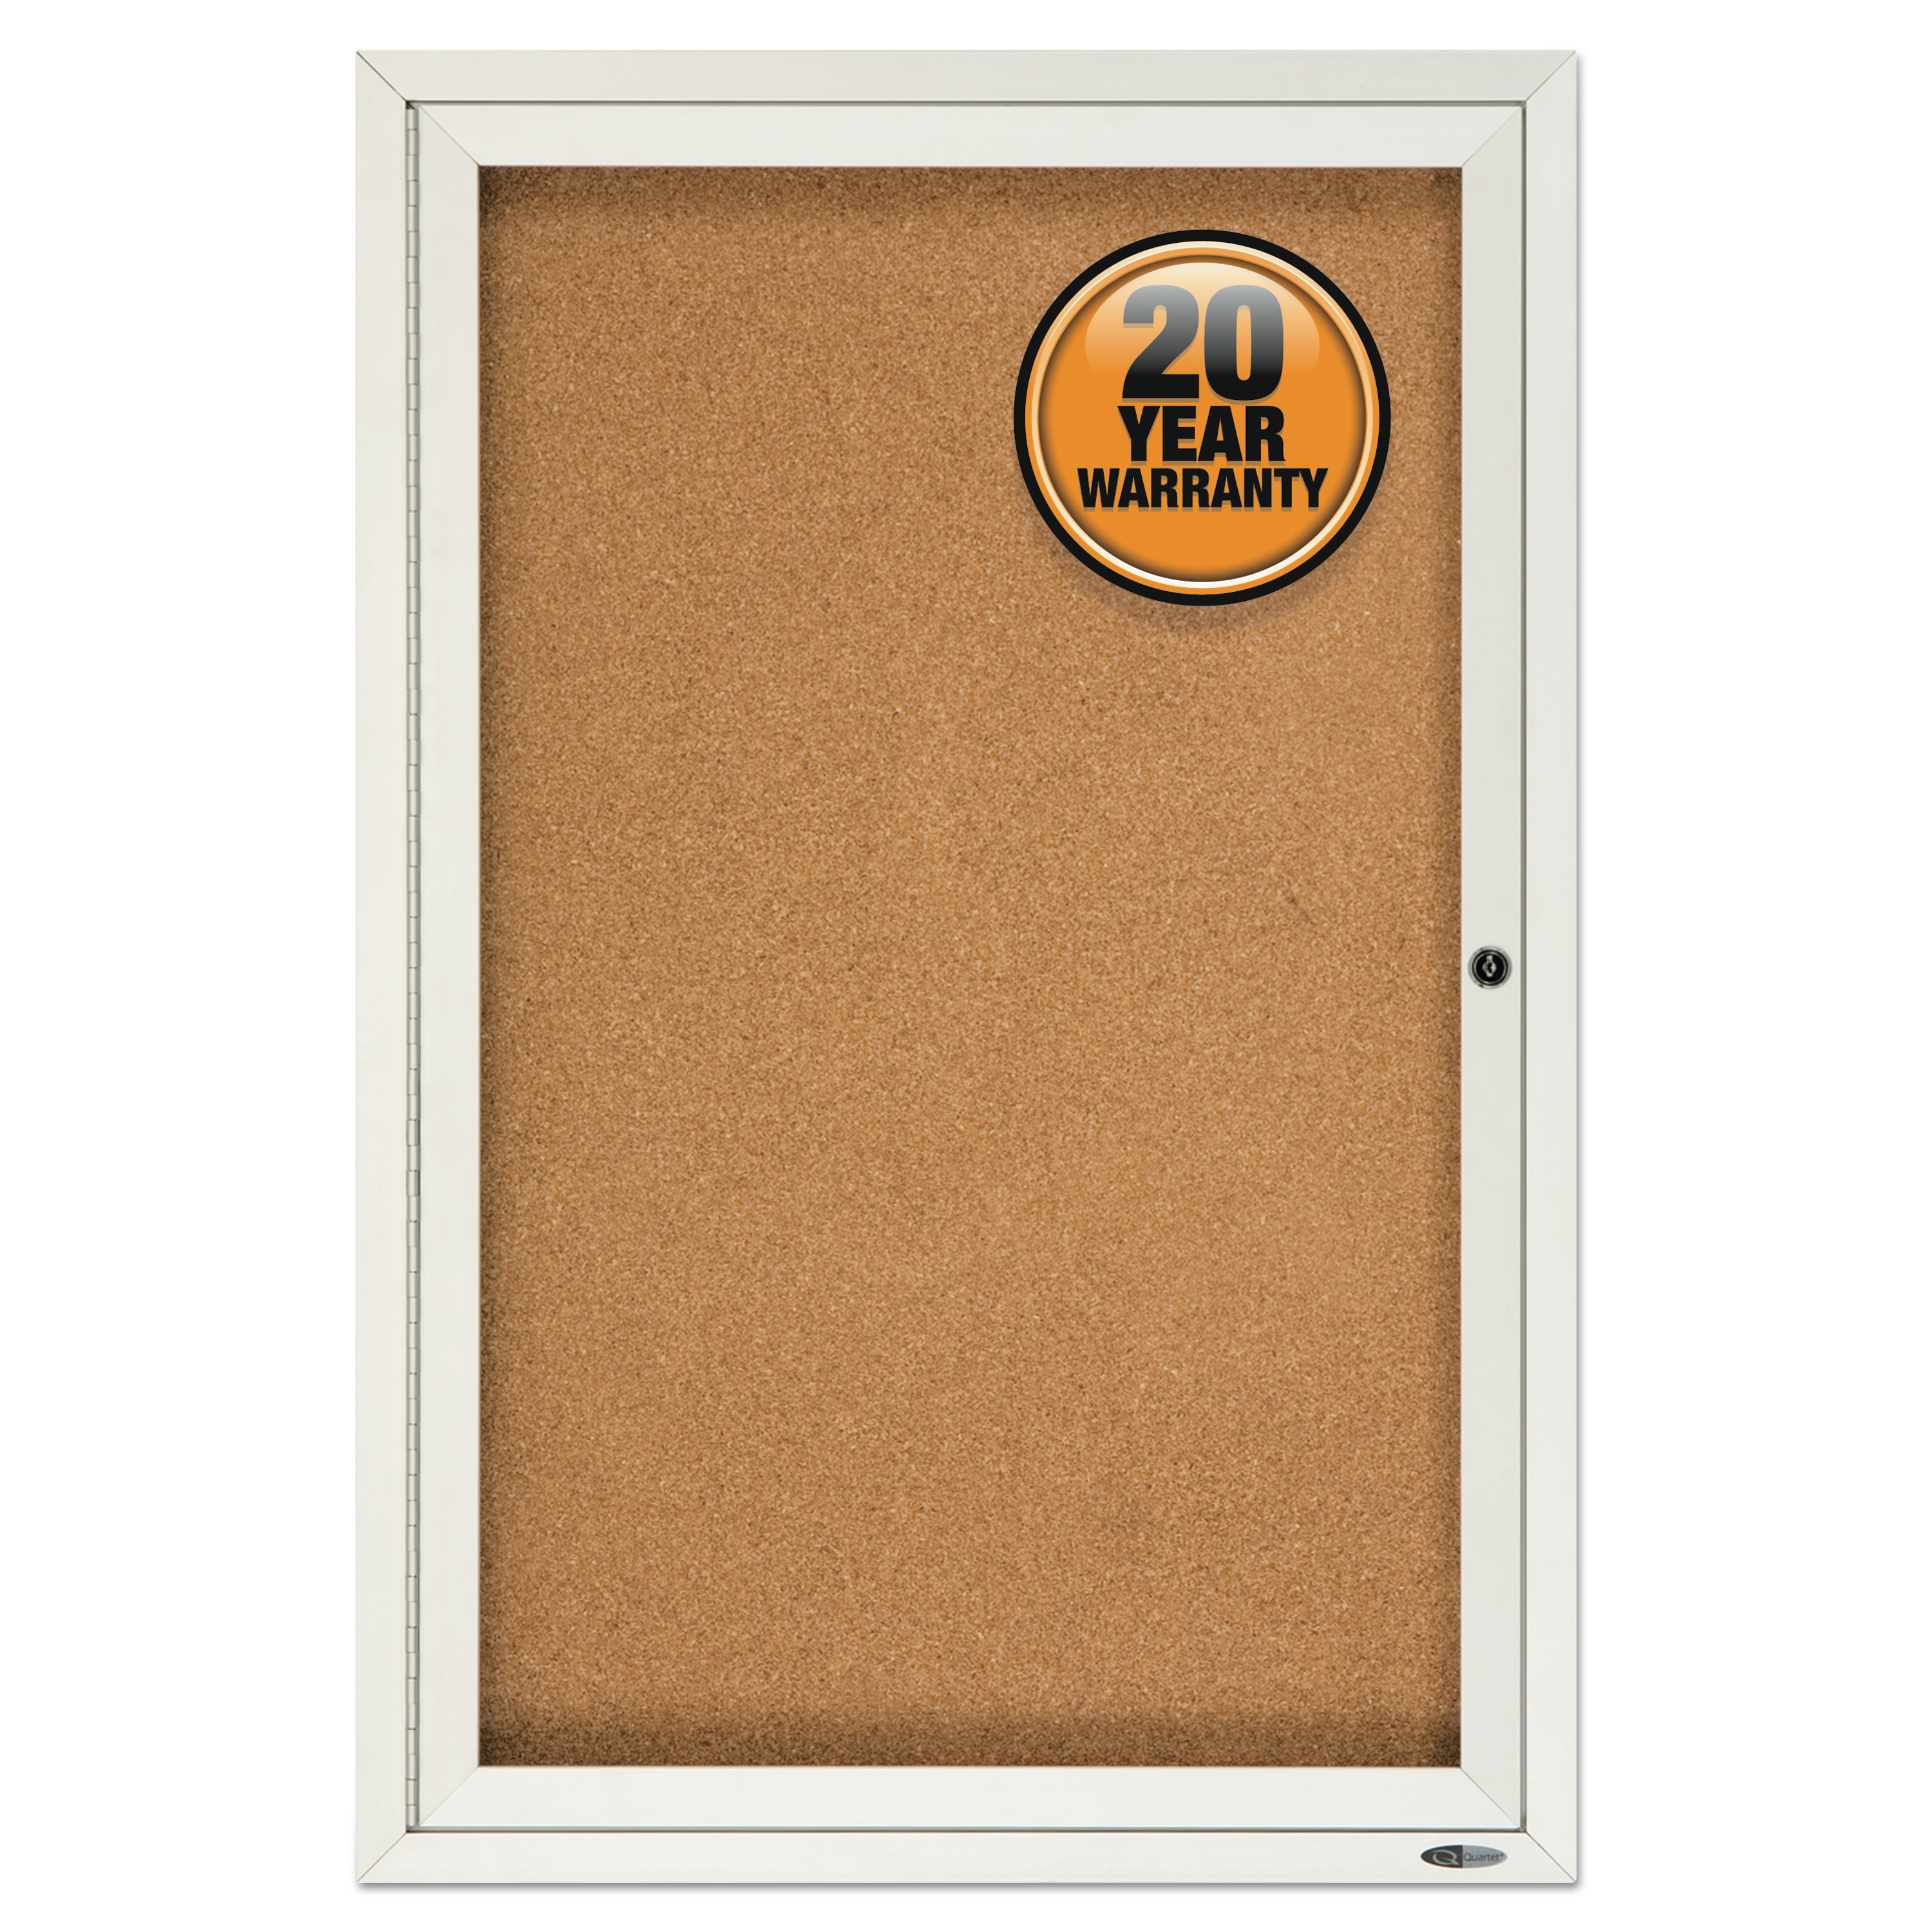  Quartet 2363 Enclosed Bulletin Board, Natural Cork/Fiberboard, 24 x 36, Silver Aluminum Frame (QRT2363) 